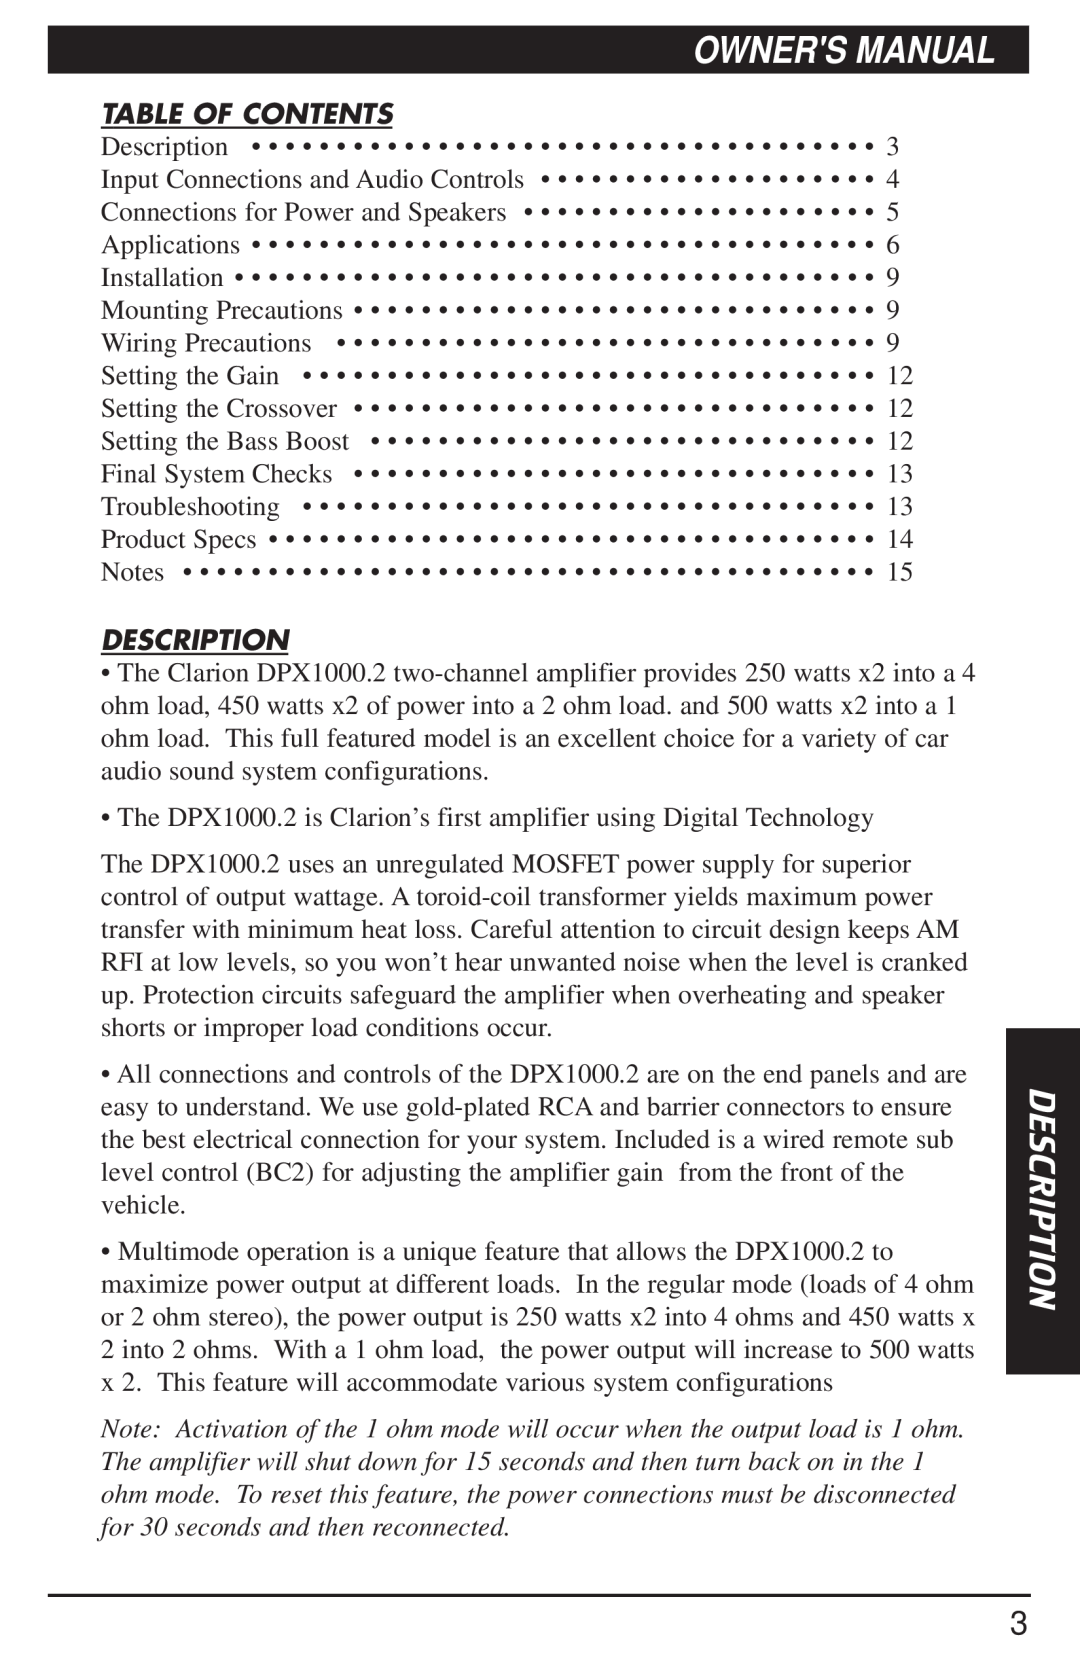 Clarion DPX1000.2 manual Description, Table Of Contents 